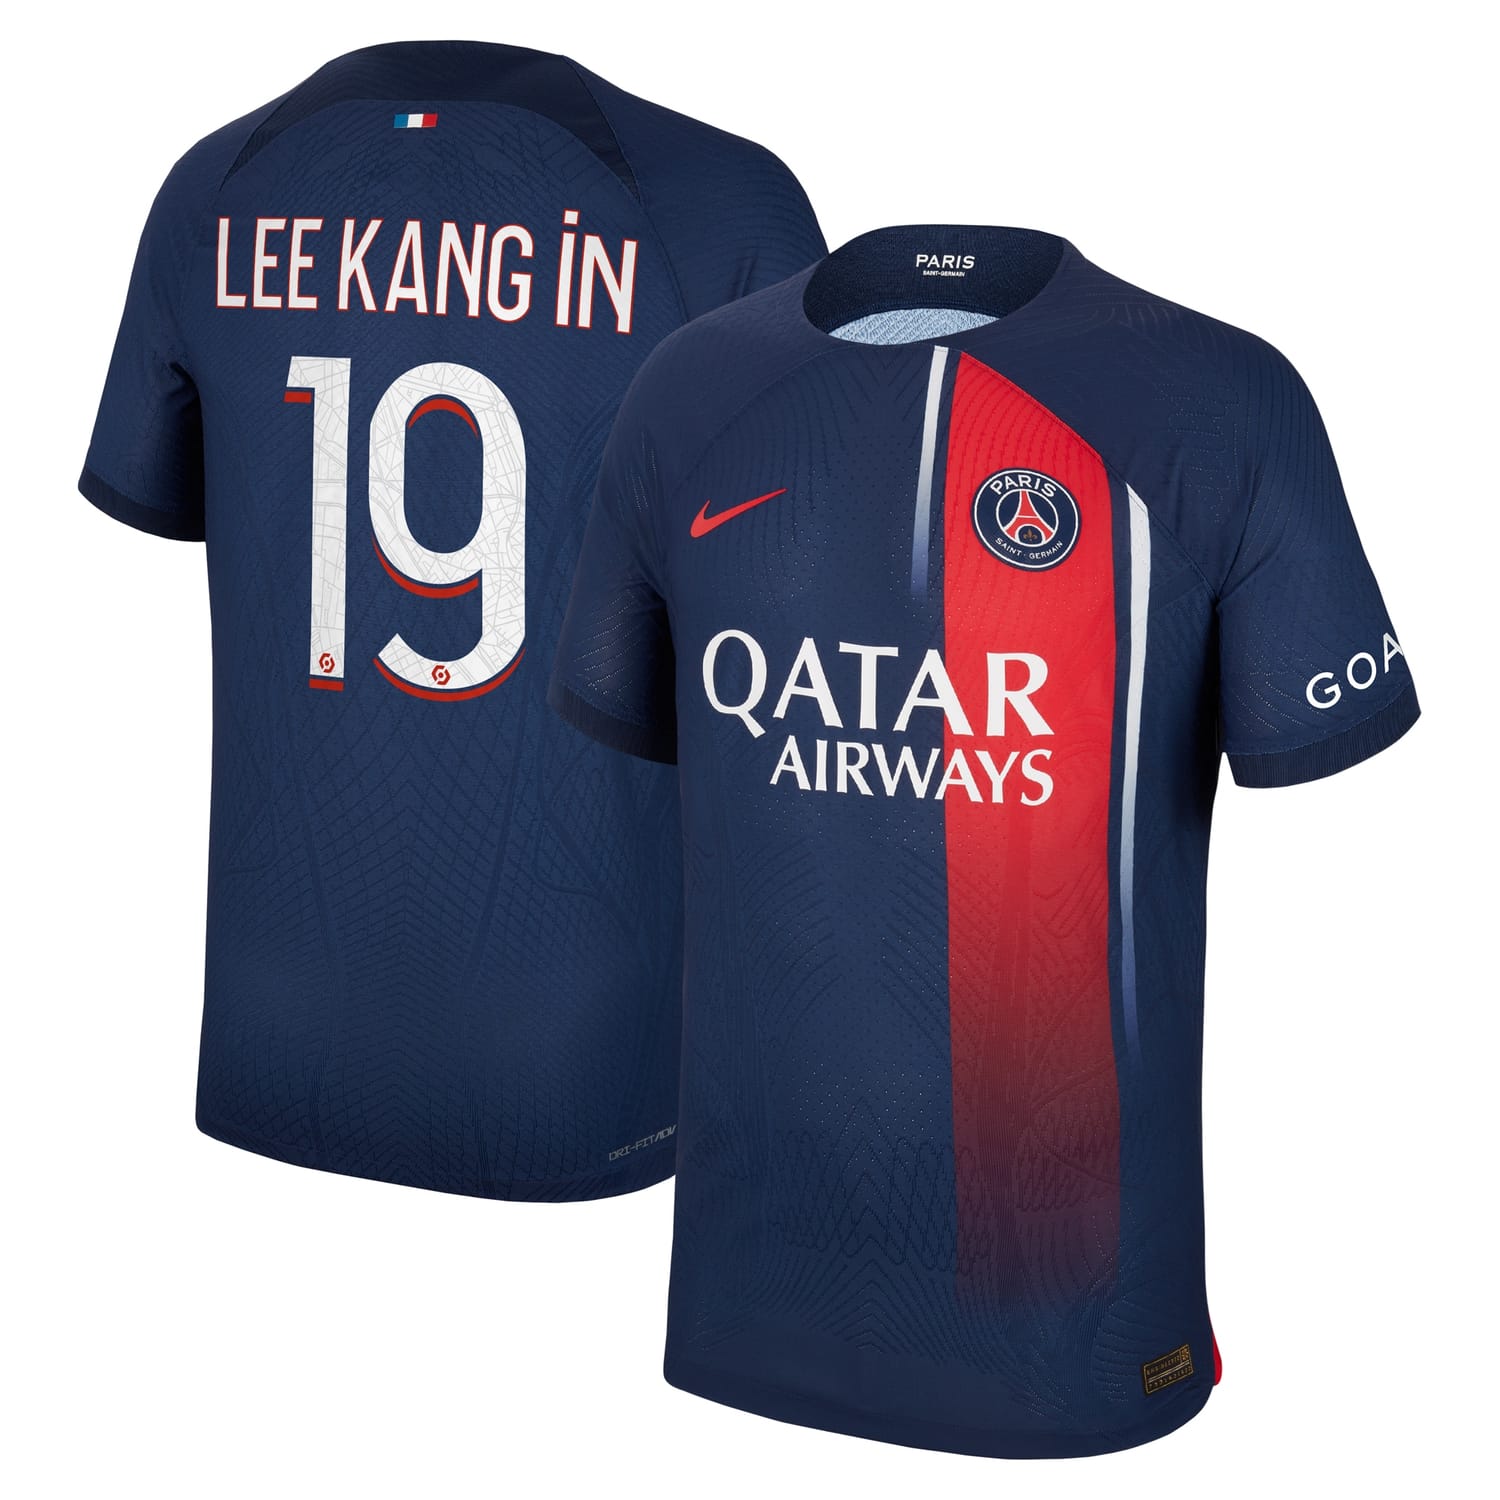 Ligue 1 Paris Saint-Germain Home Authentic Jersey Shirt Navy 2023-24 player Lee Kang In printing for Men